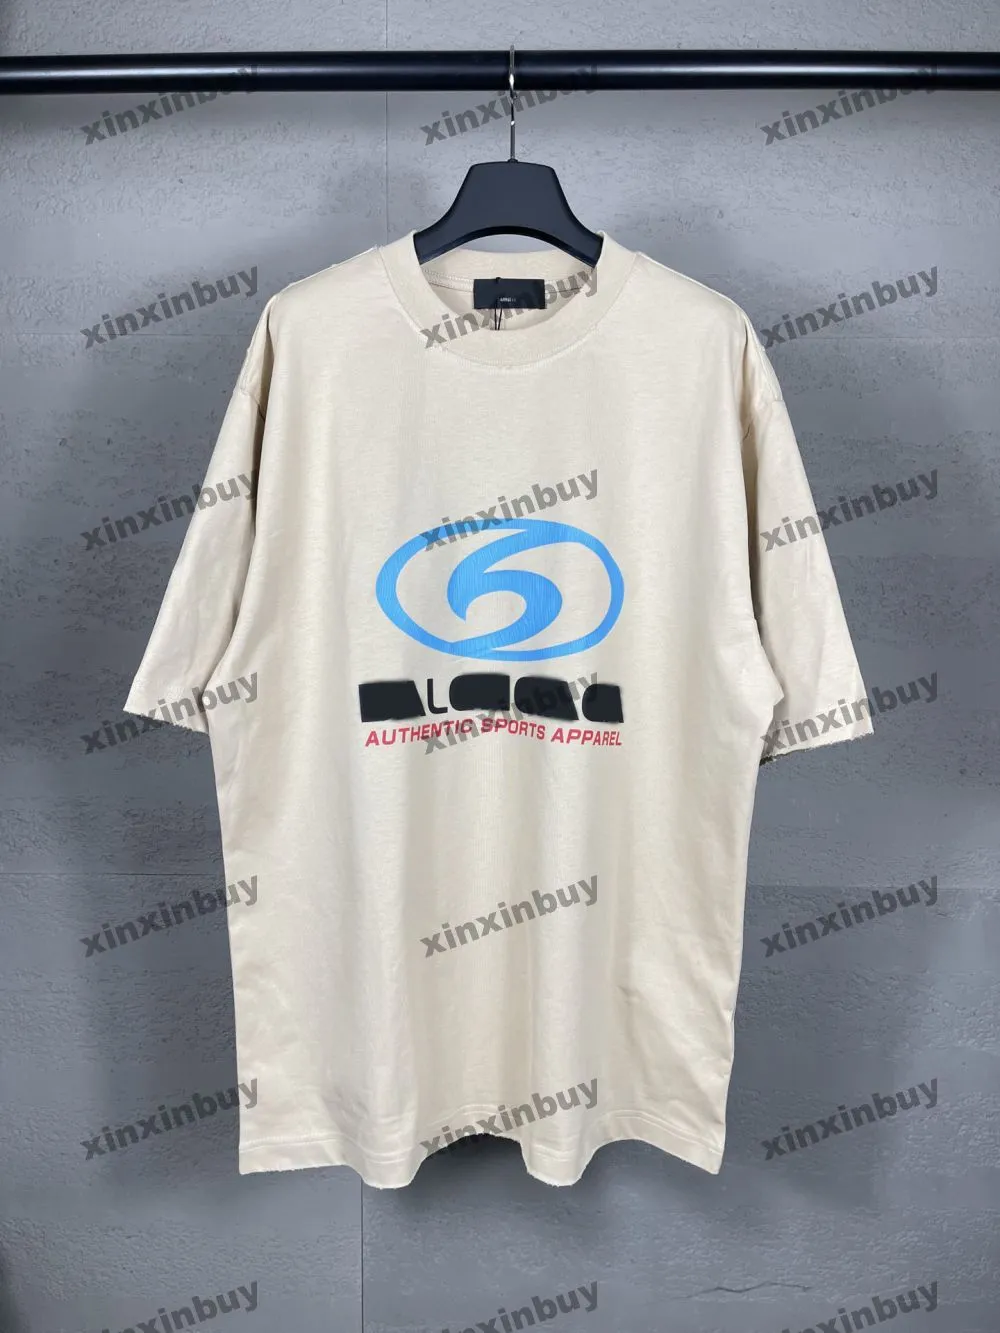 xinxinbuy Hombres diseñador Camiseta camiseta París ola destruida letra impresa manga corta algodón mujer Negro blanco azul gris rojo XS-2XL